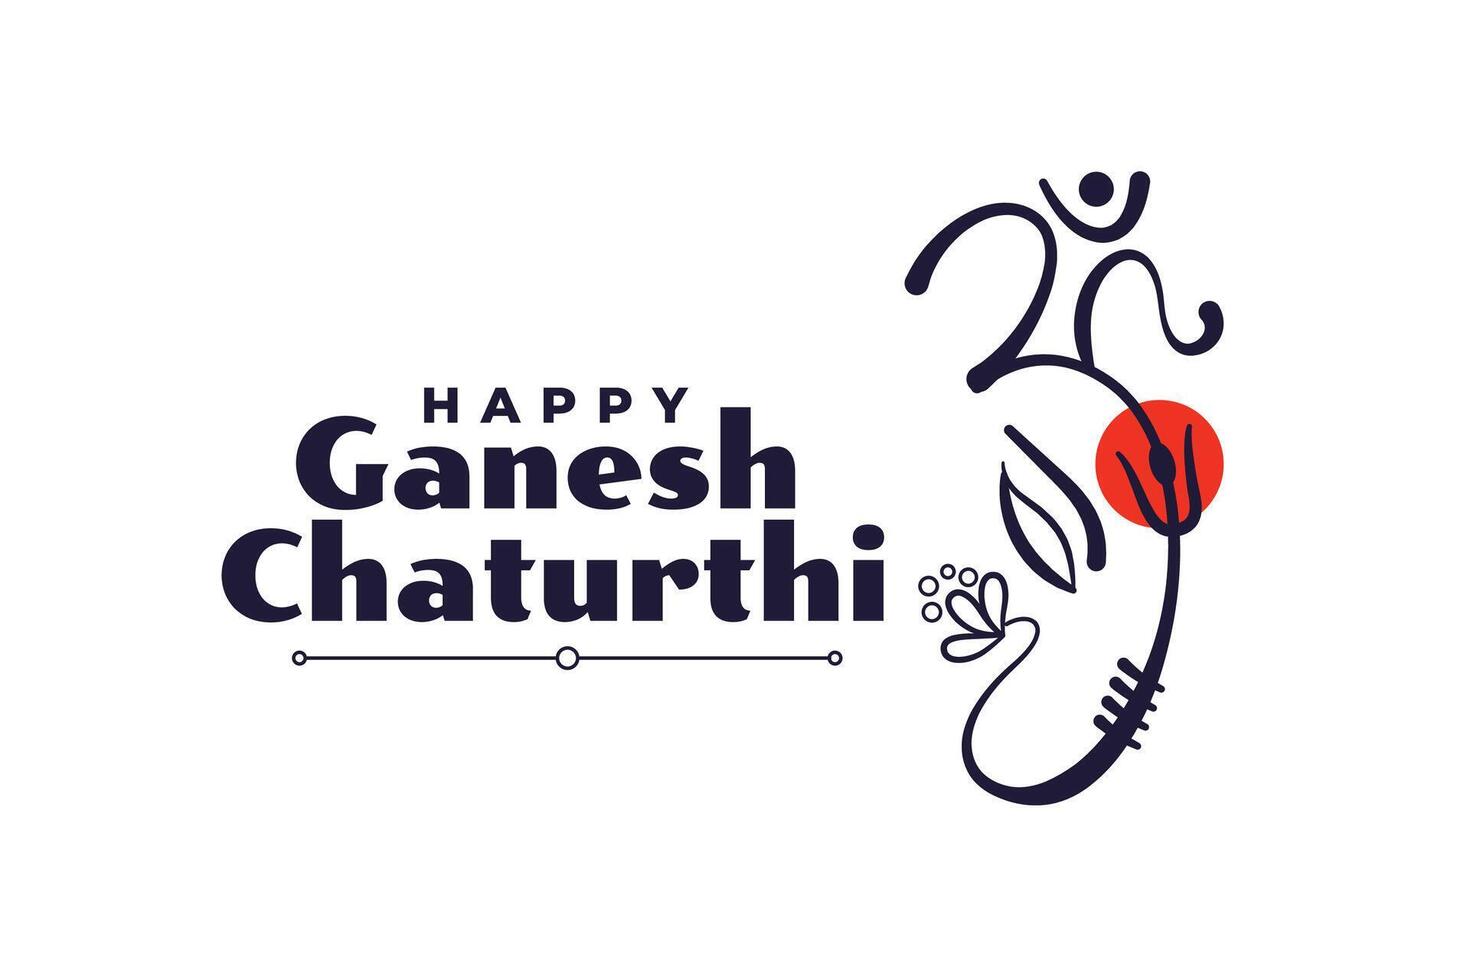 lord ganesha festival of ganesh chaturthi background vector